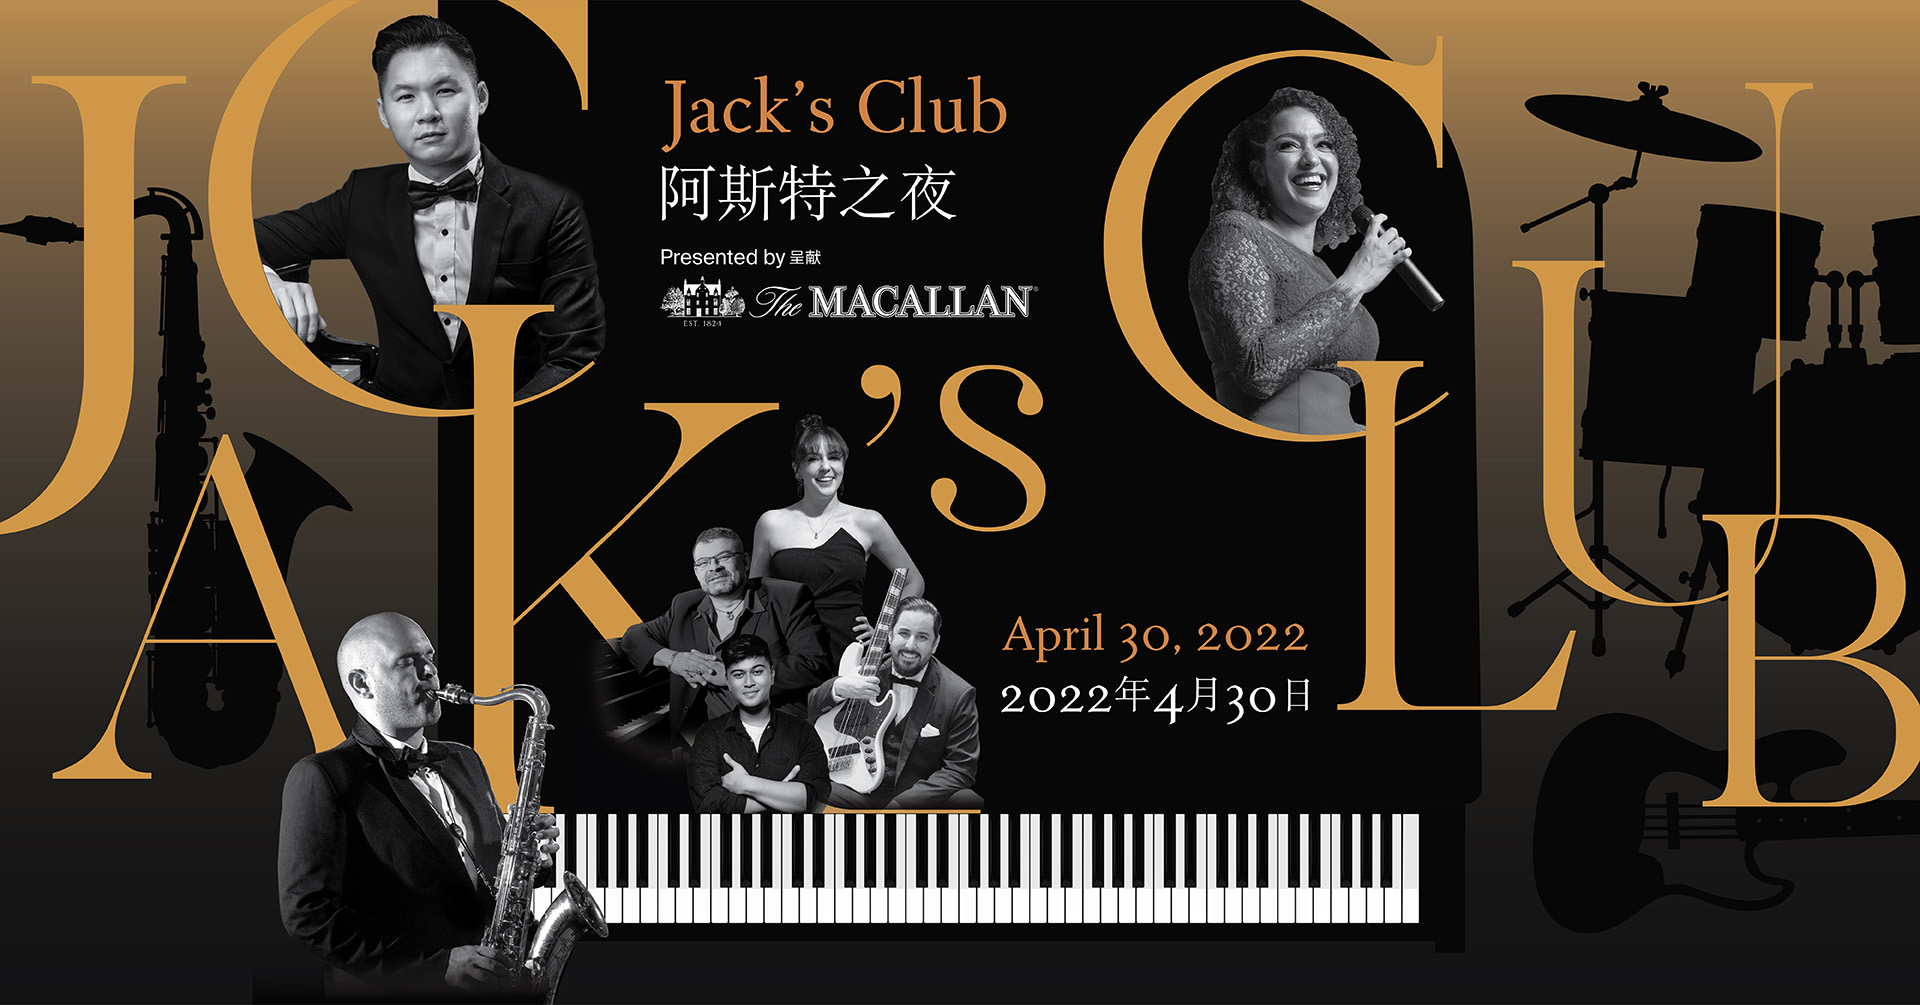 St. Regis Macao Jack's Club